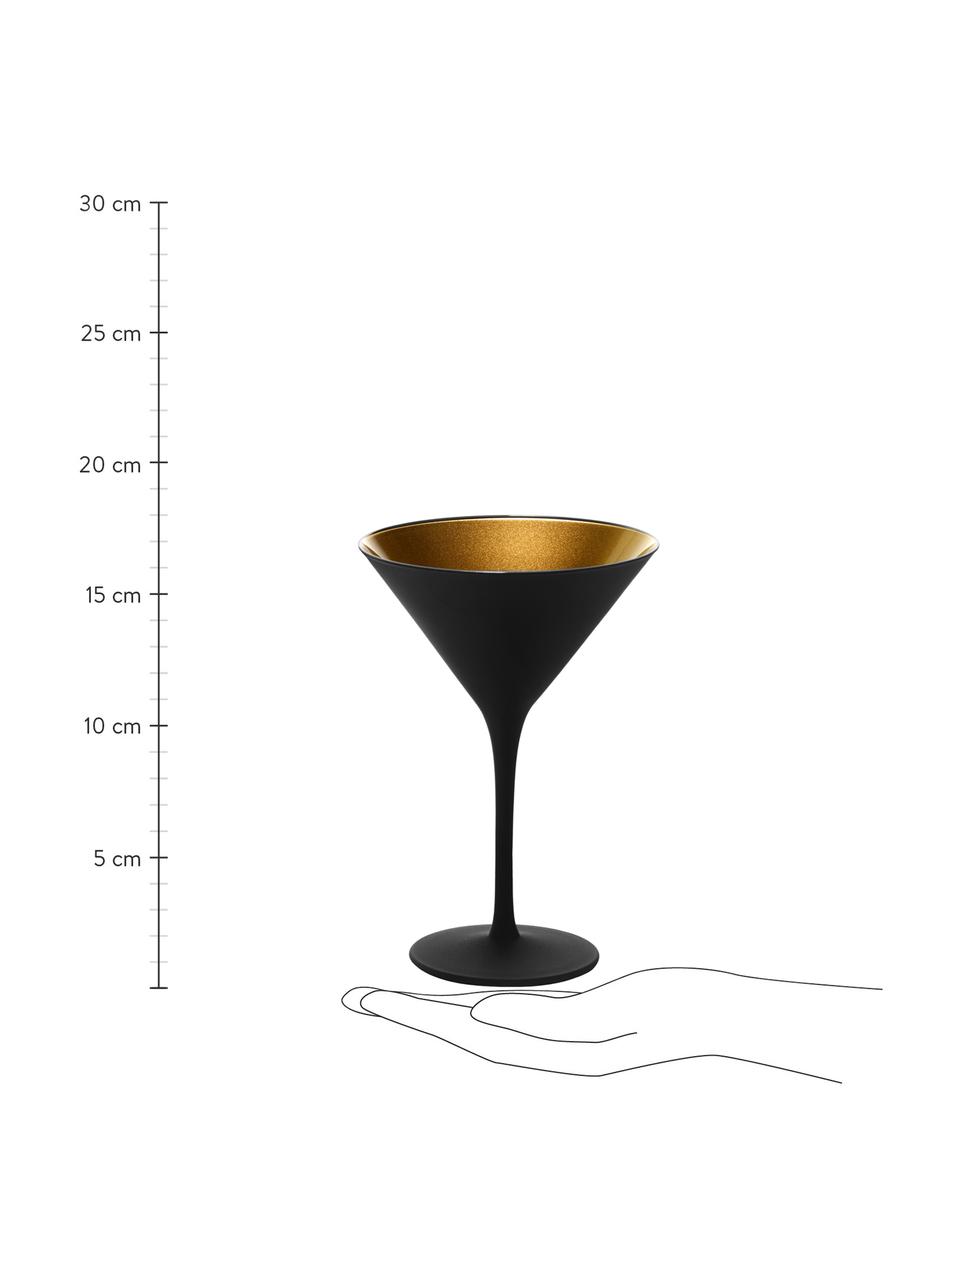 Kristallen cocktailglazen Elements in zwart/goudkleurig, 6 stuks, Gecoat kristalglas, Zwart, goudkleurig, Ø 12 x H 17 cm, 240 ml